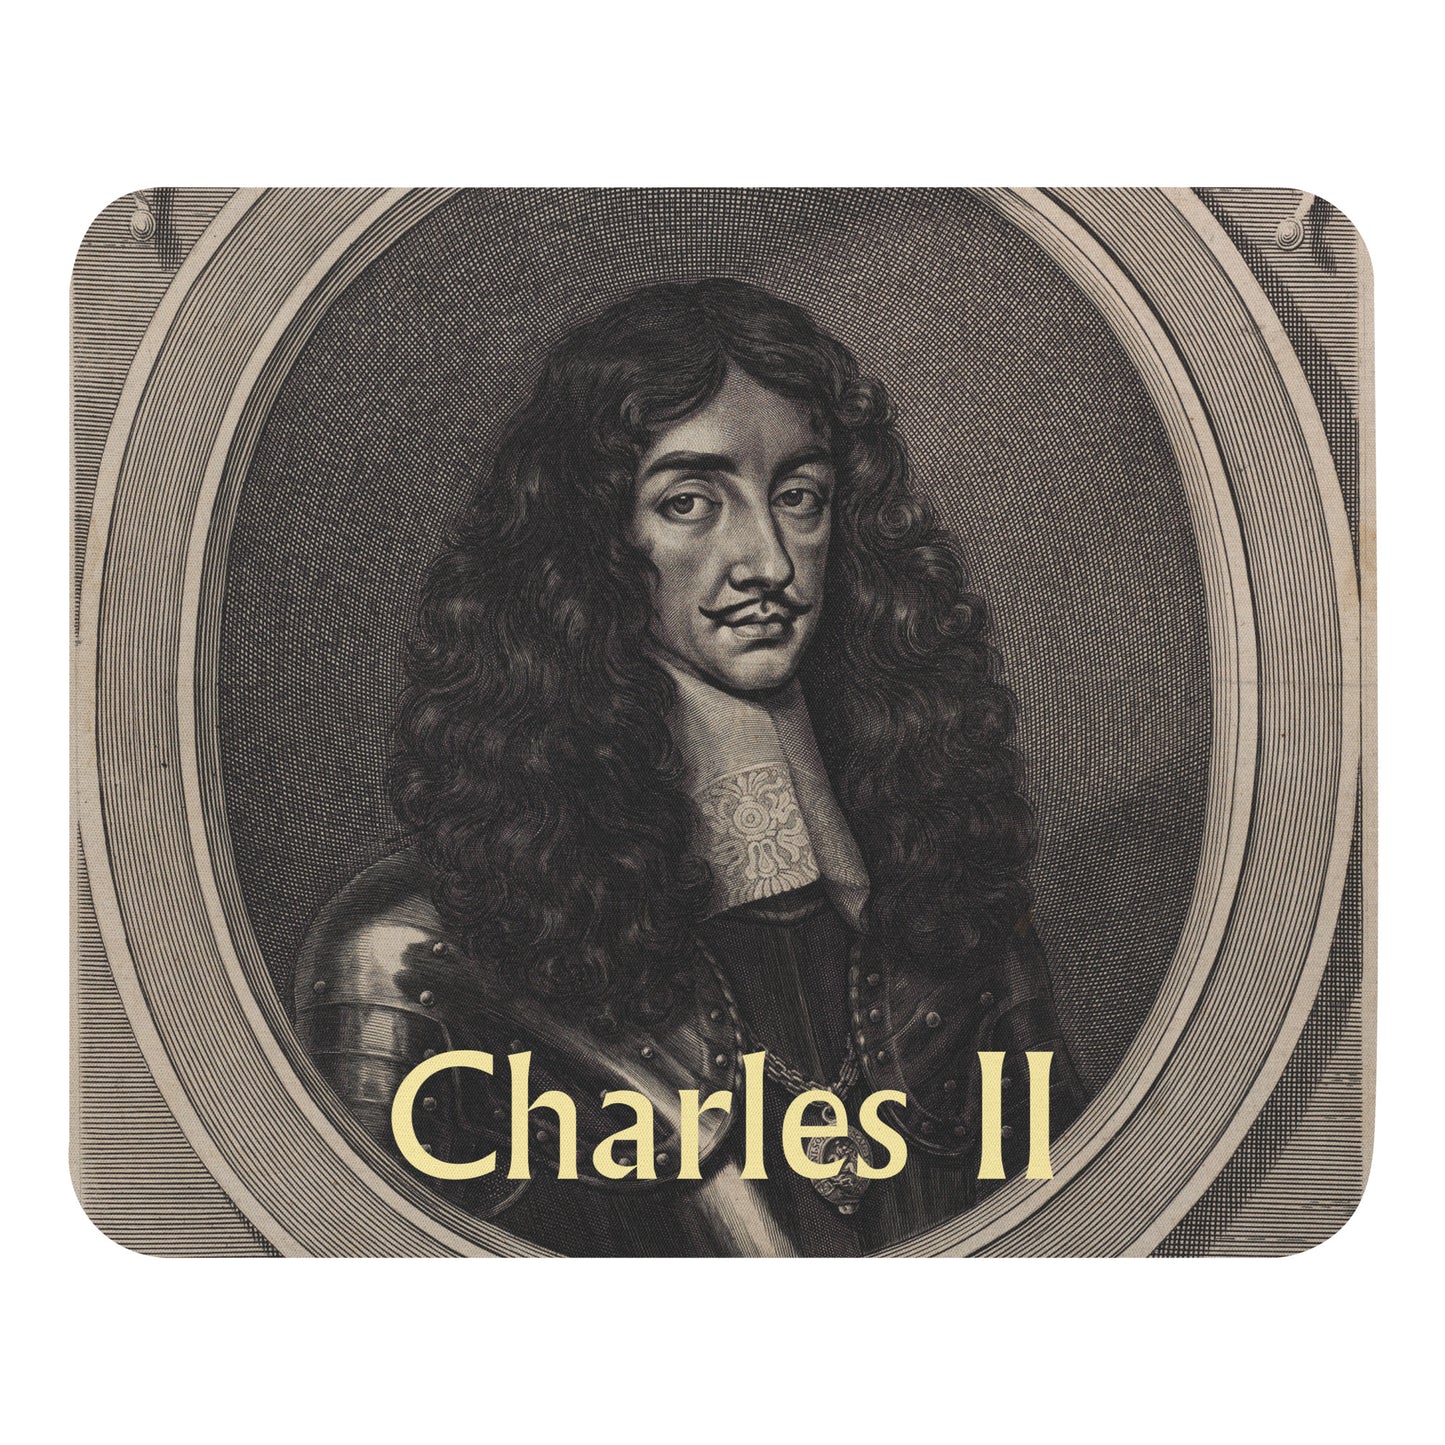 Charles II mouse pad